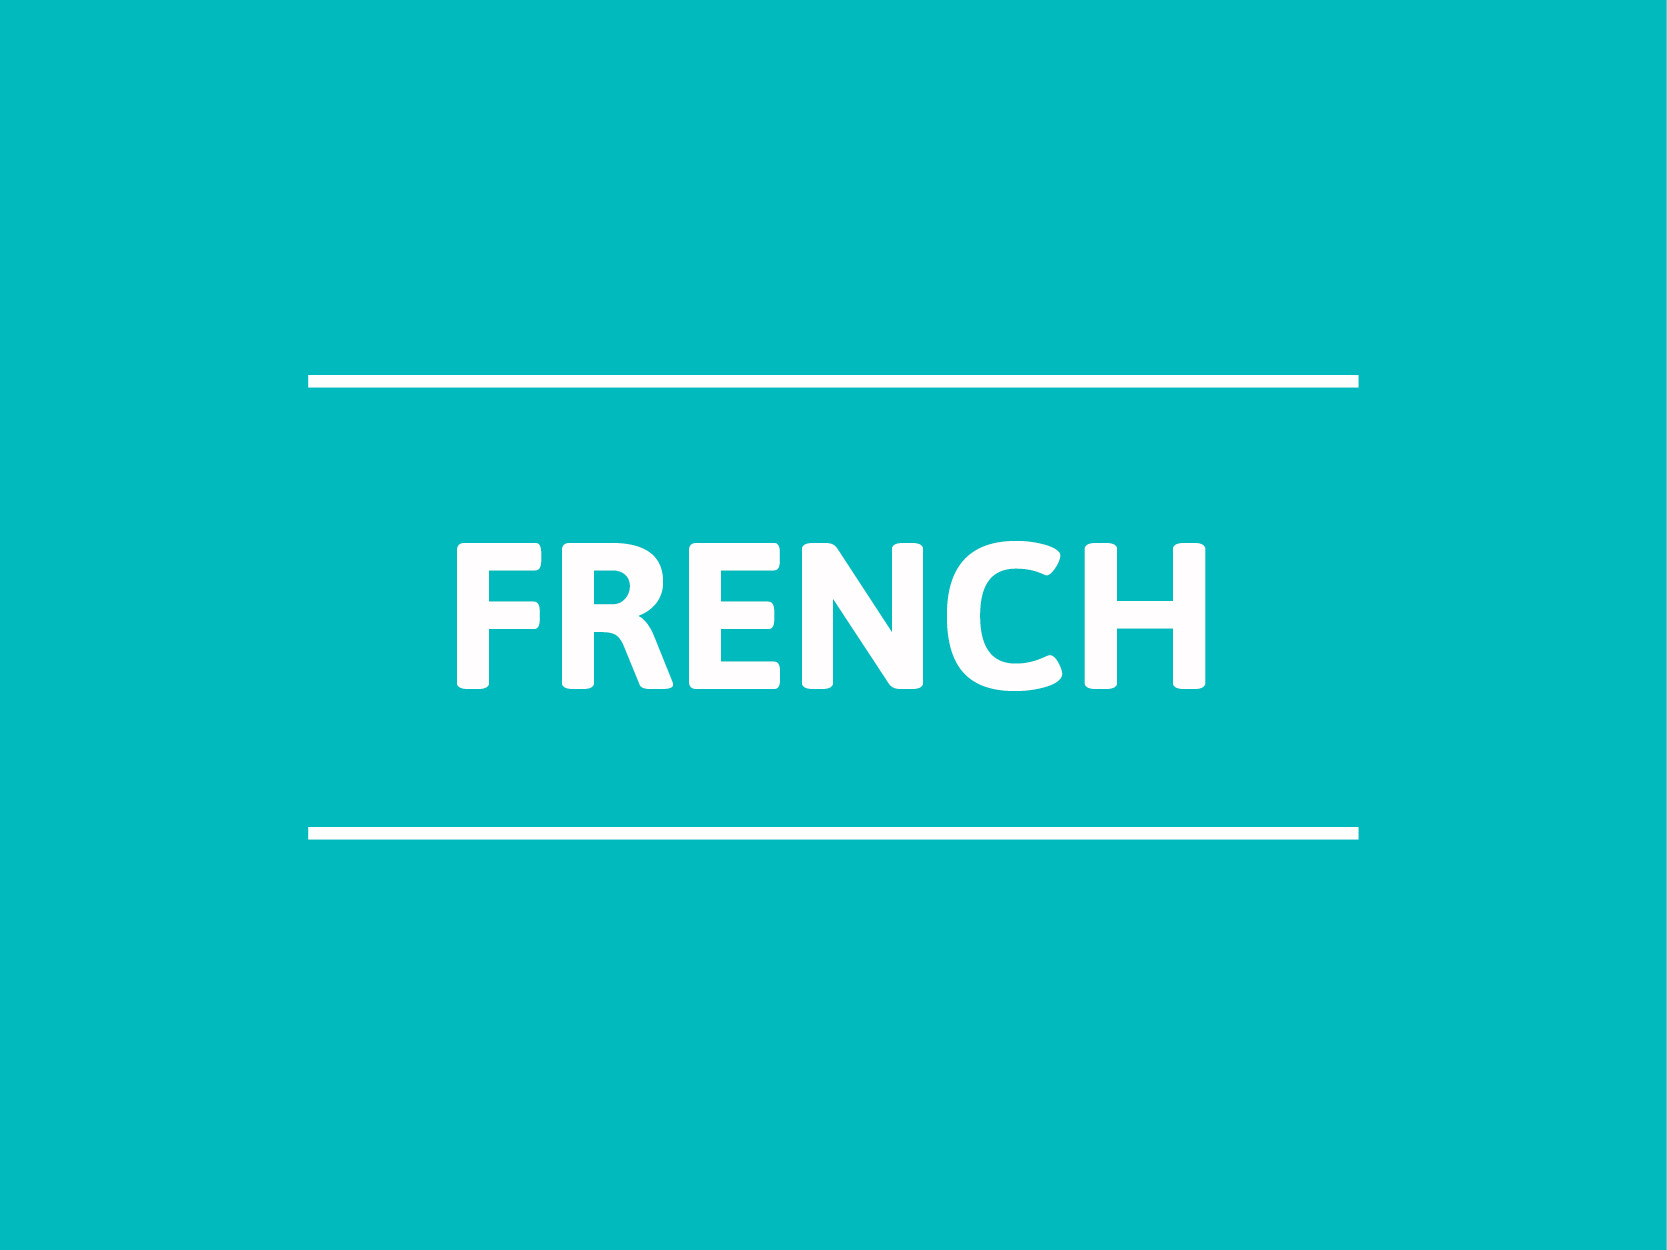 Translation internships for French students